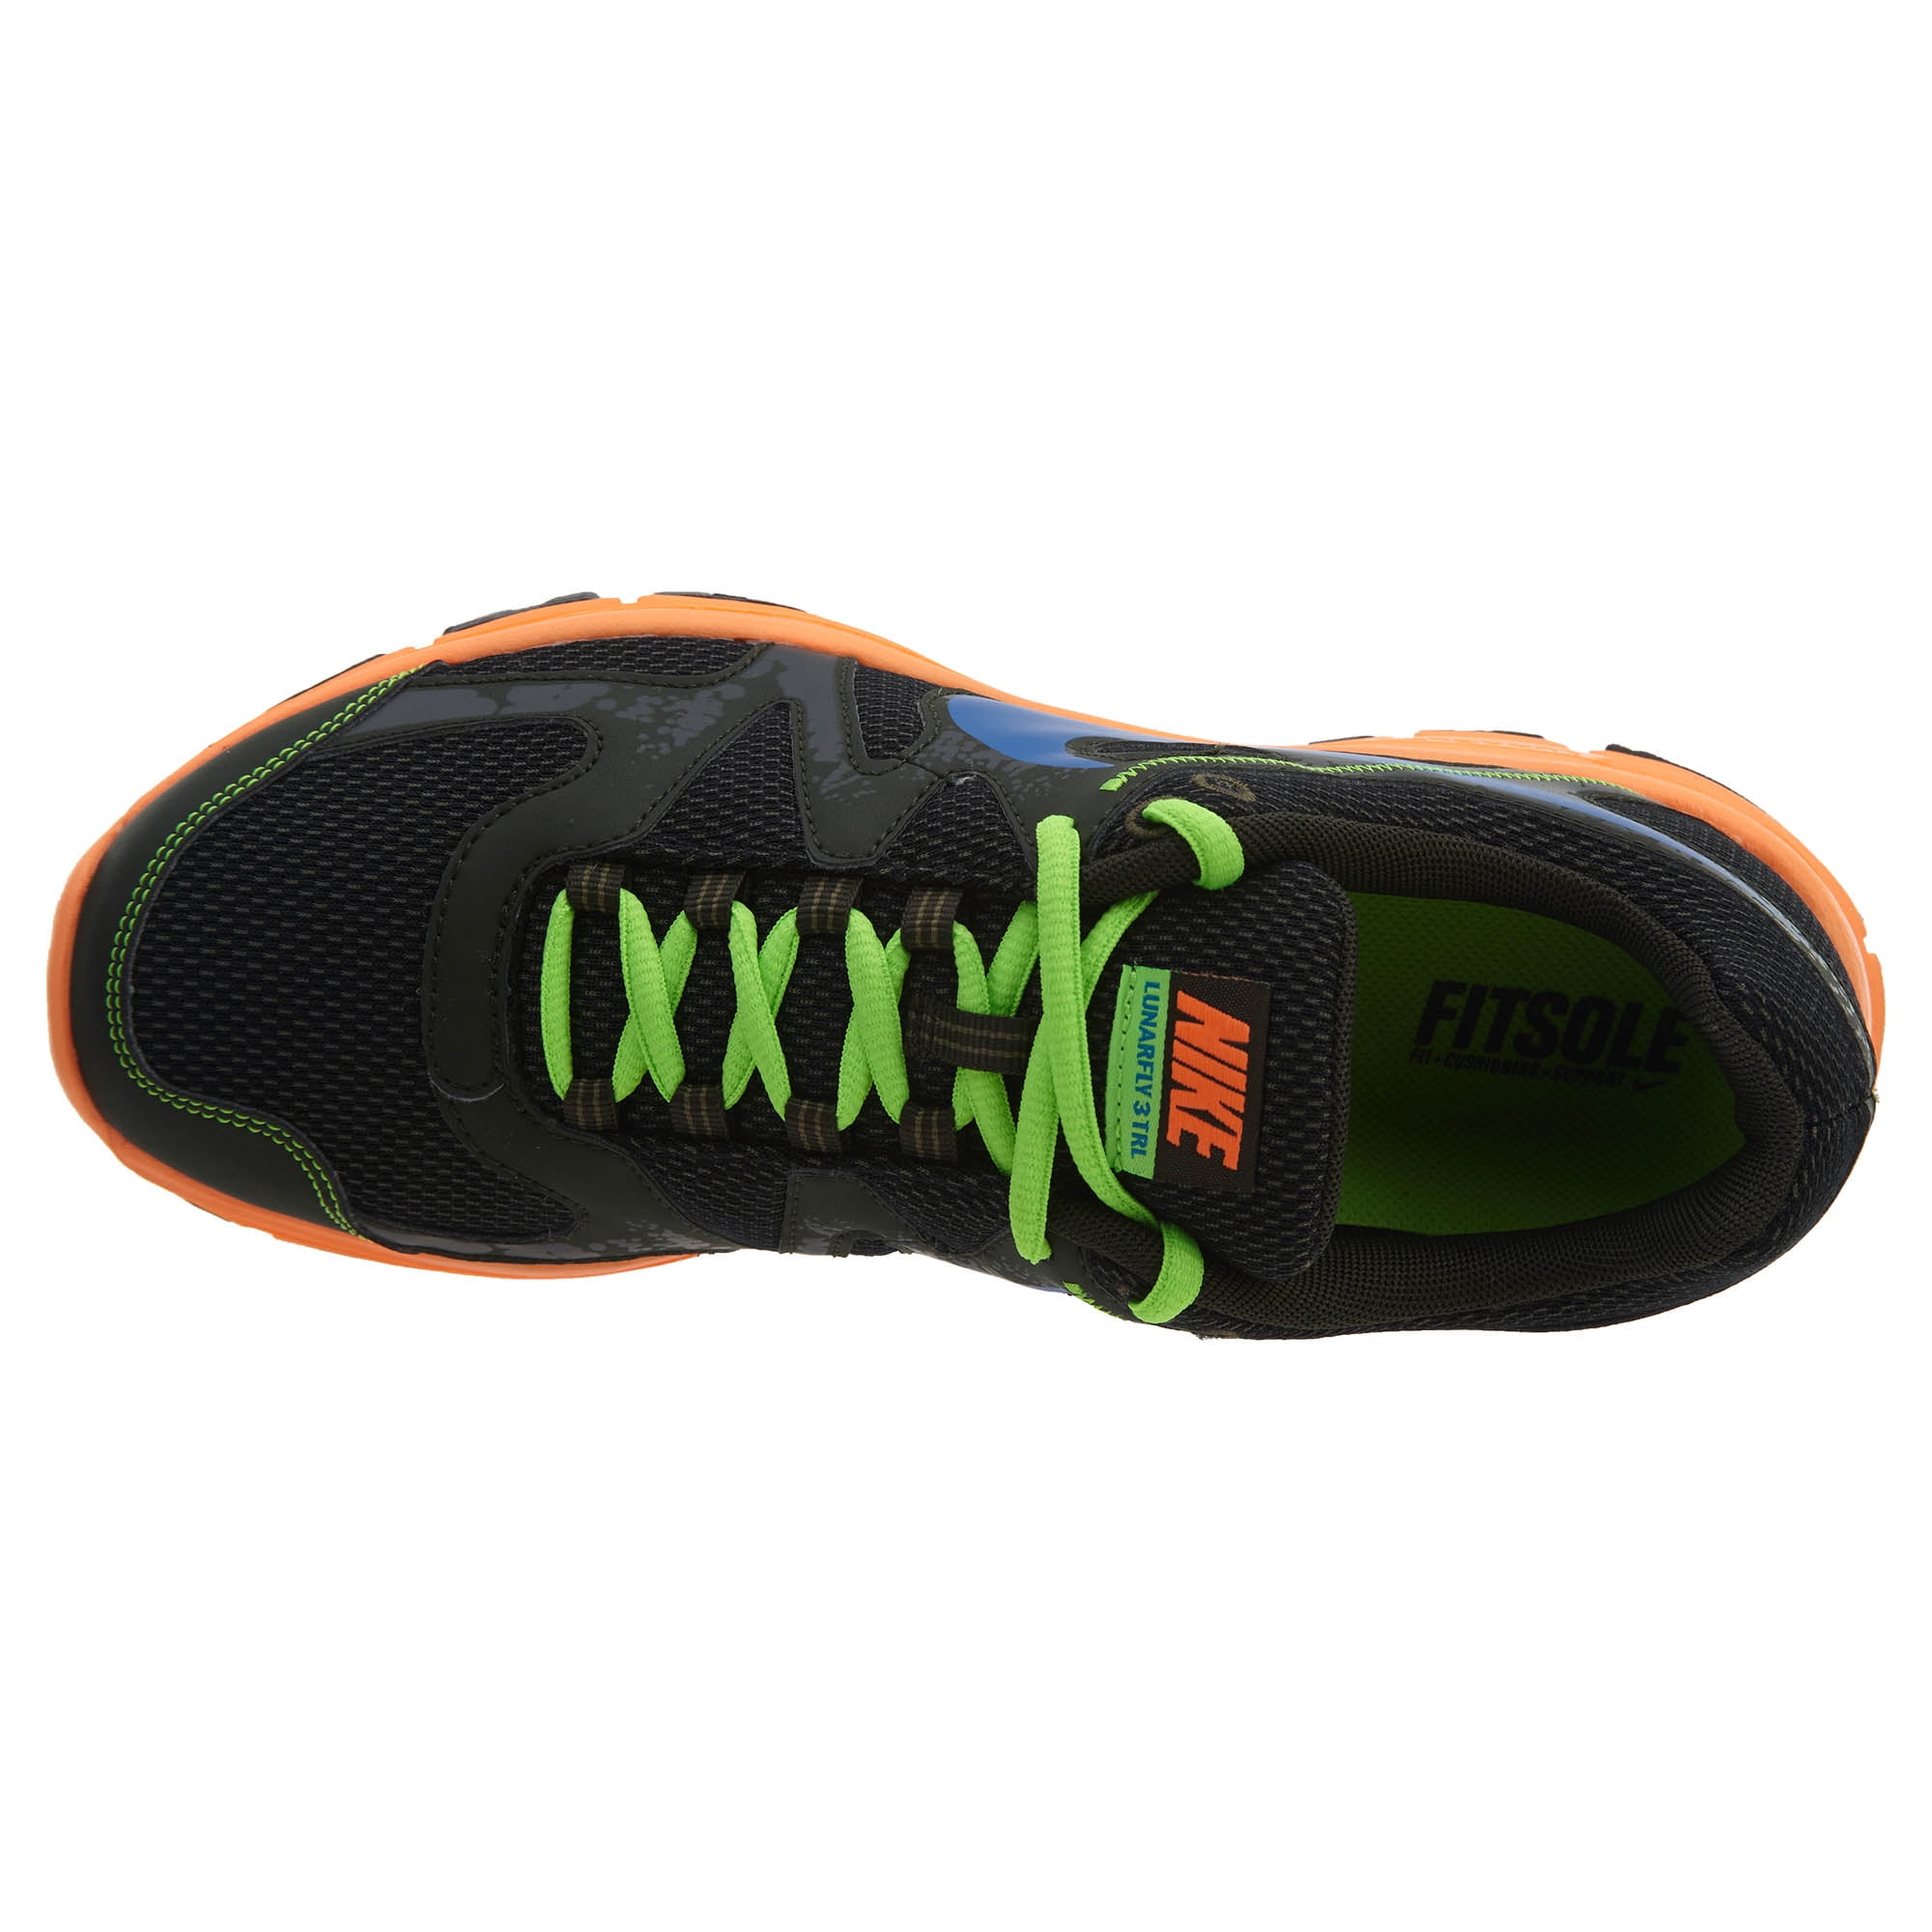 agujero tuberculosis Nevada Nike Lunarfly+ 3 Trail Mens Style # 525027 - Walmart.com